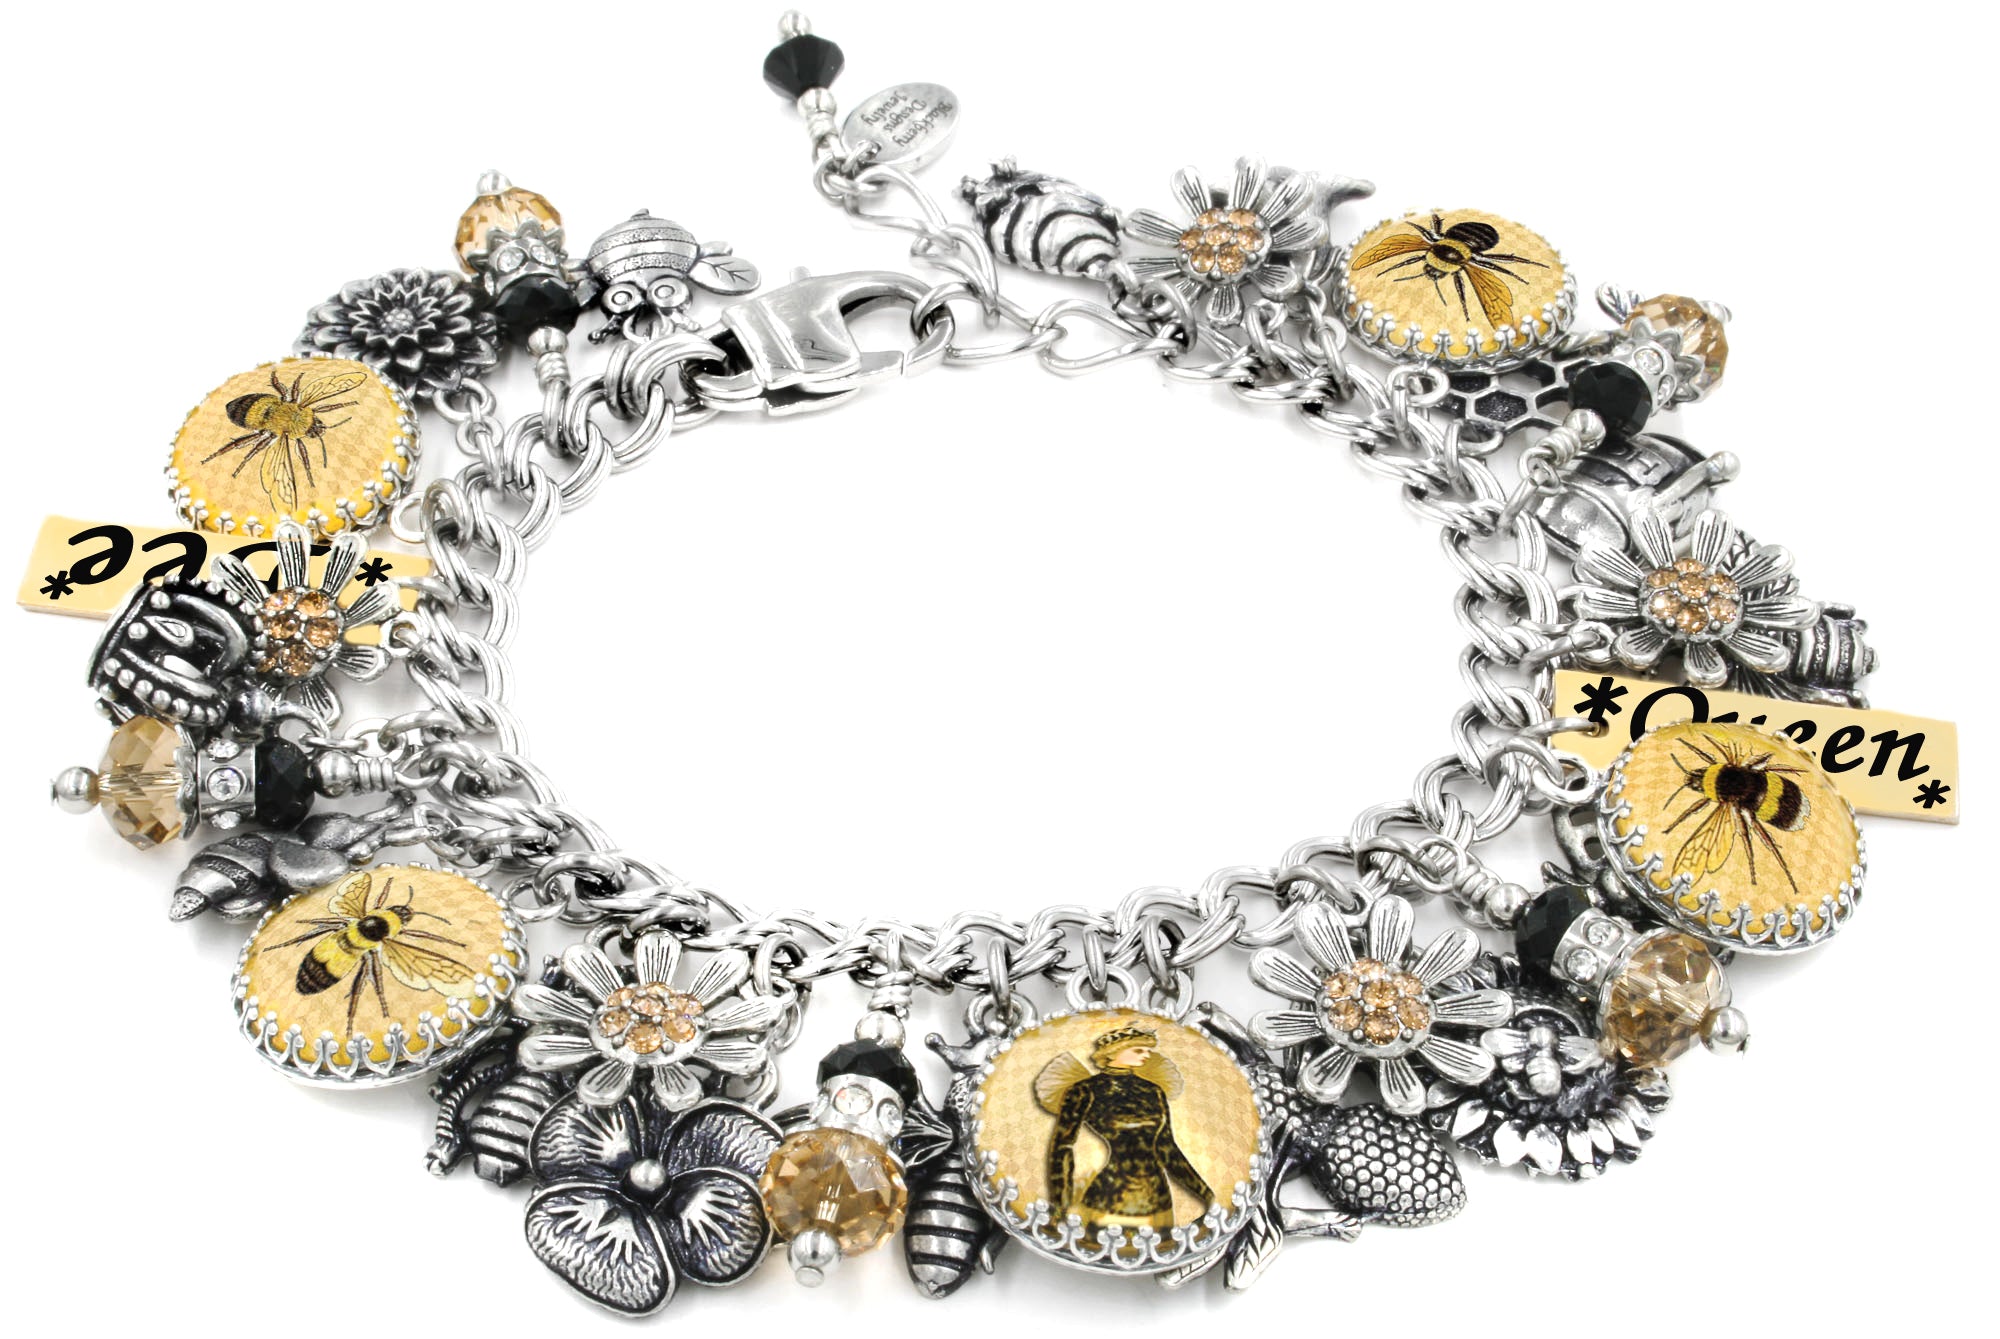 Queen Bee + Stainless Steel + Charm Bracelets